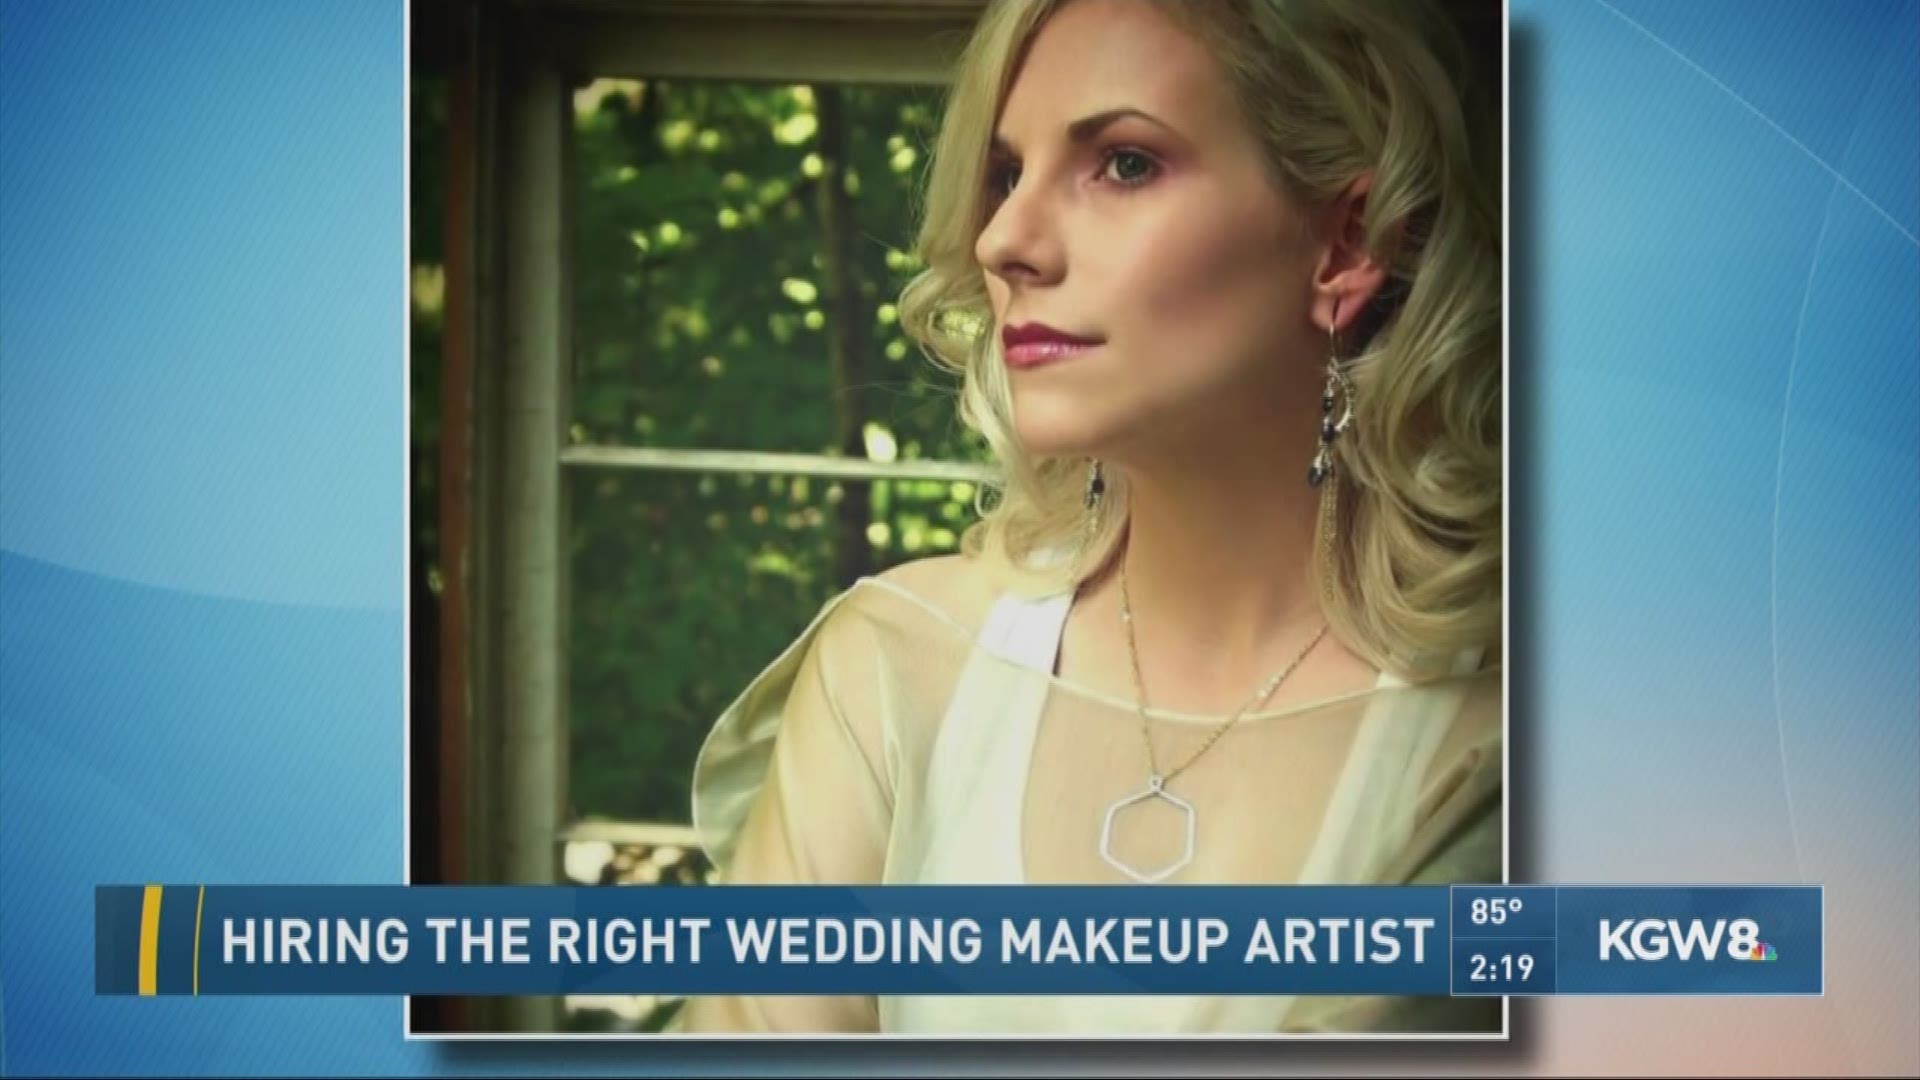 Hiring the right wedding makeup artist